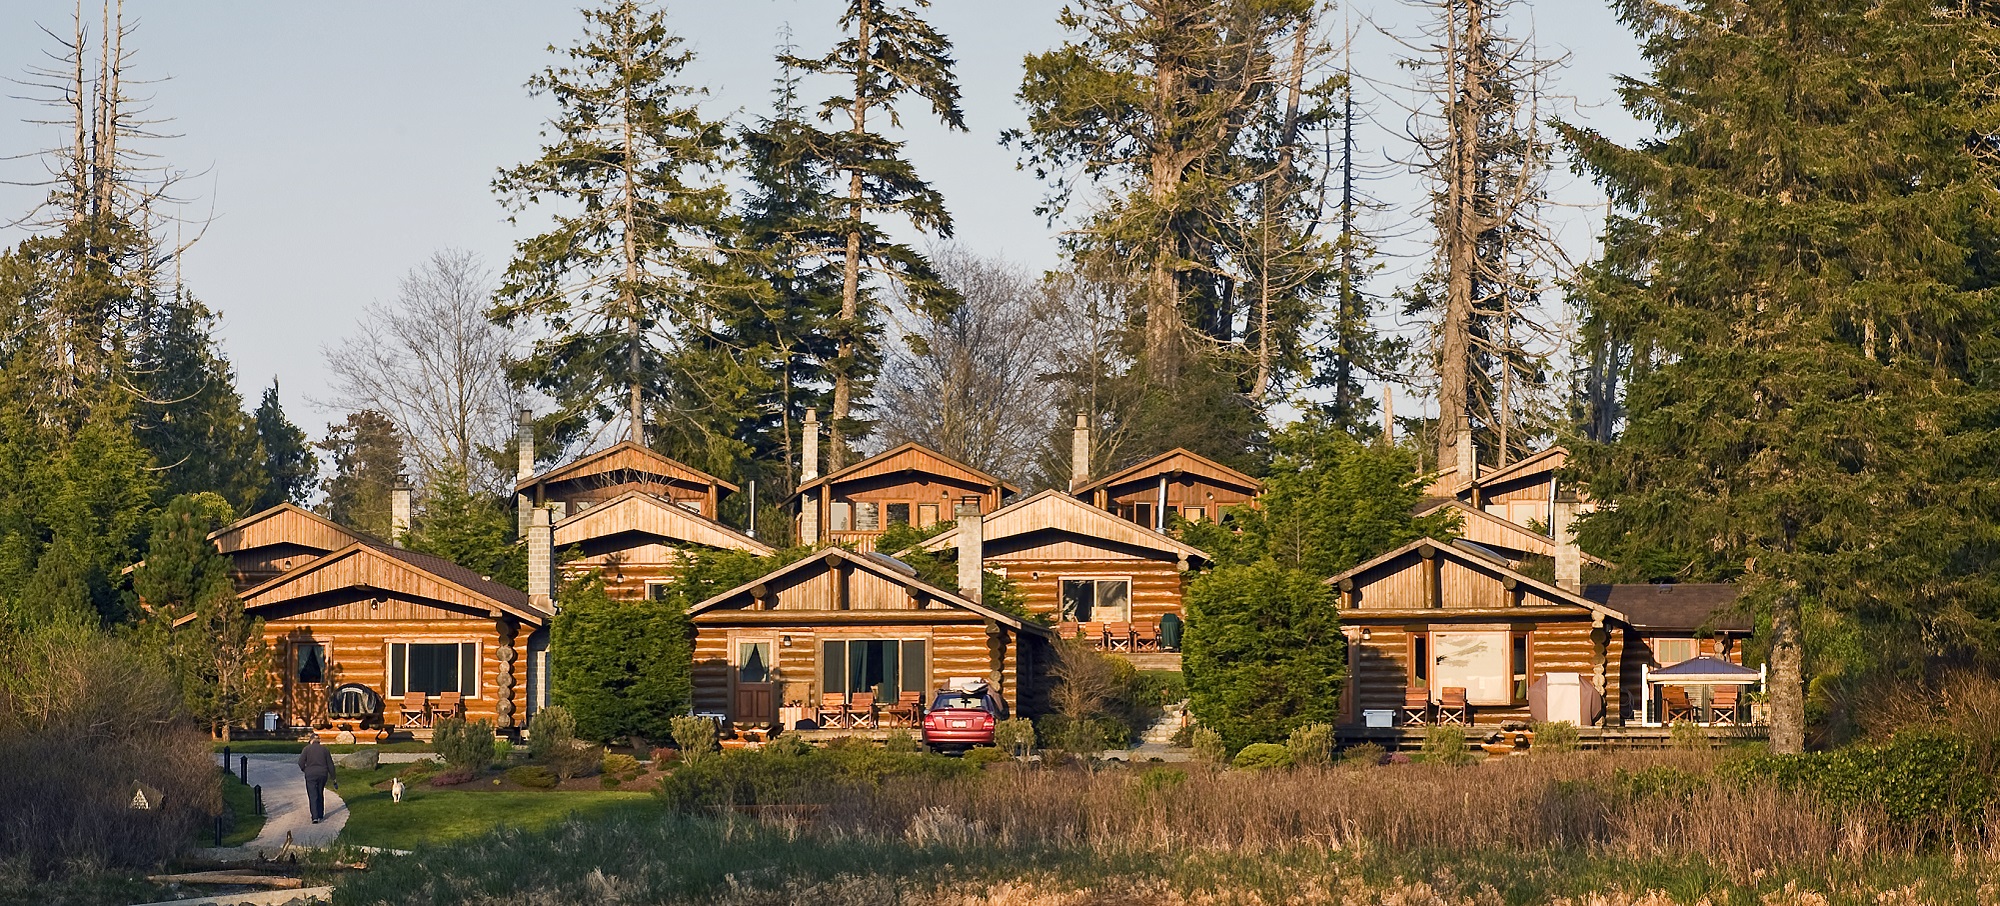 Camping Cabins Camping Travel British Columbia